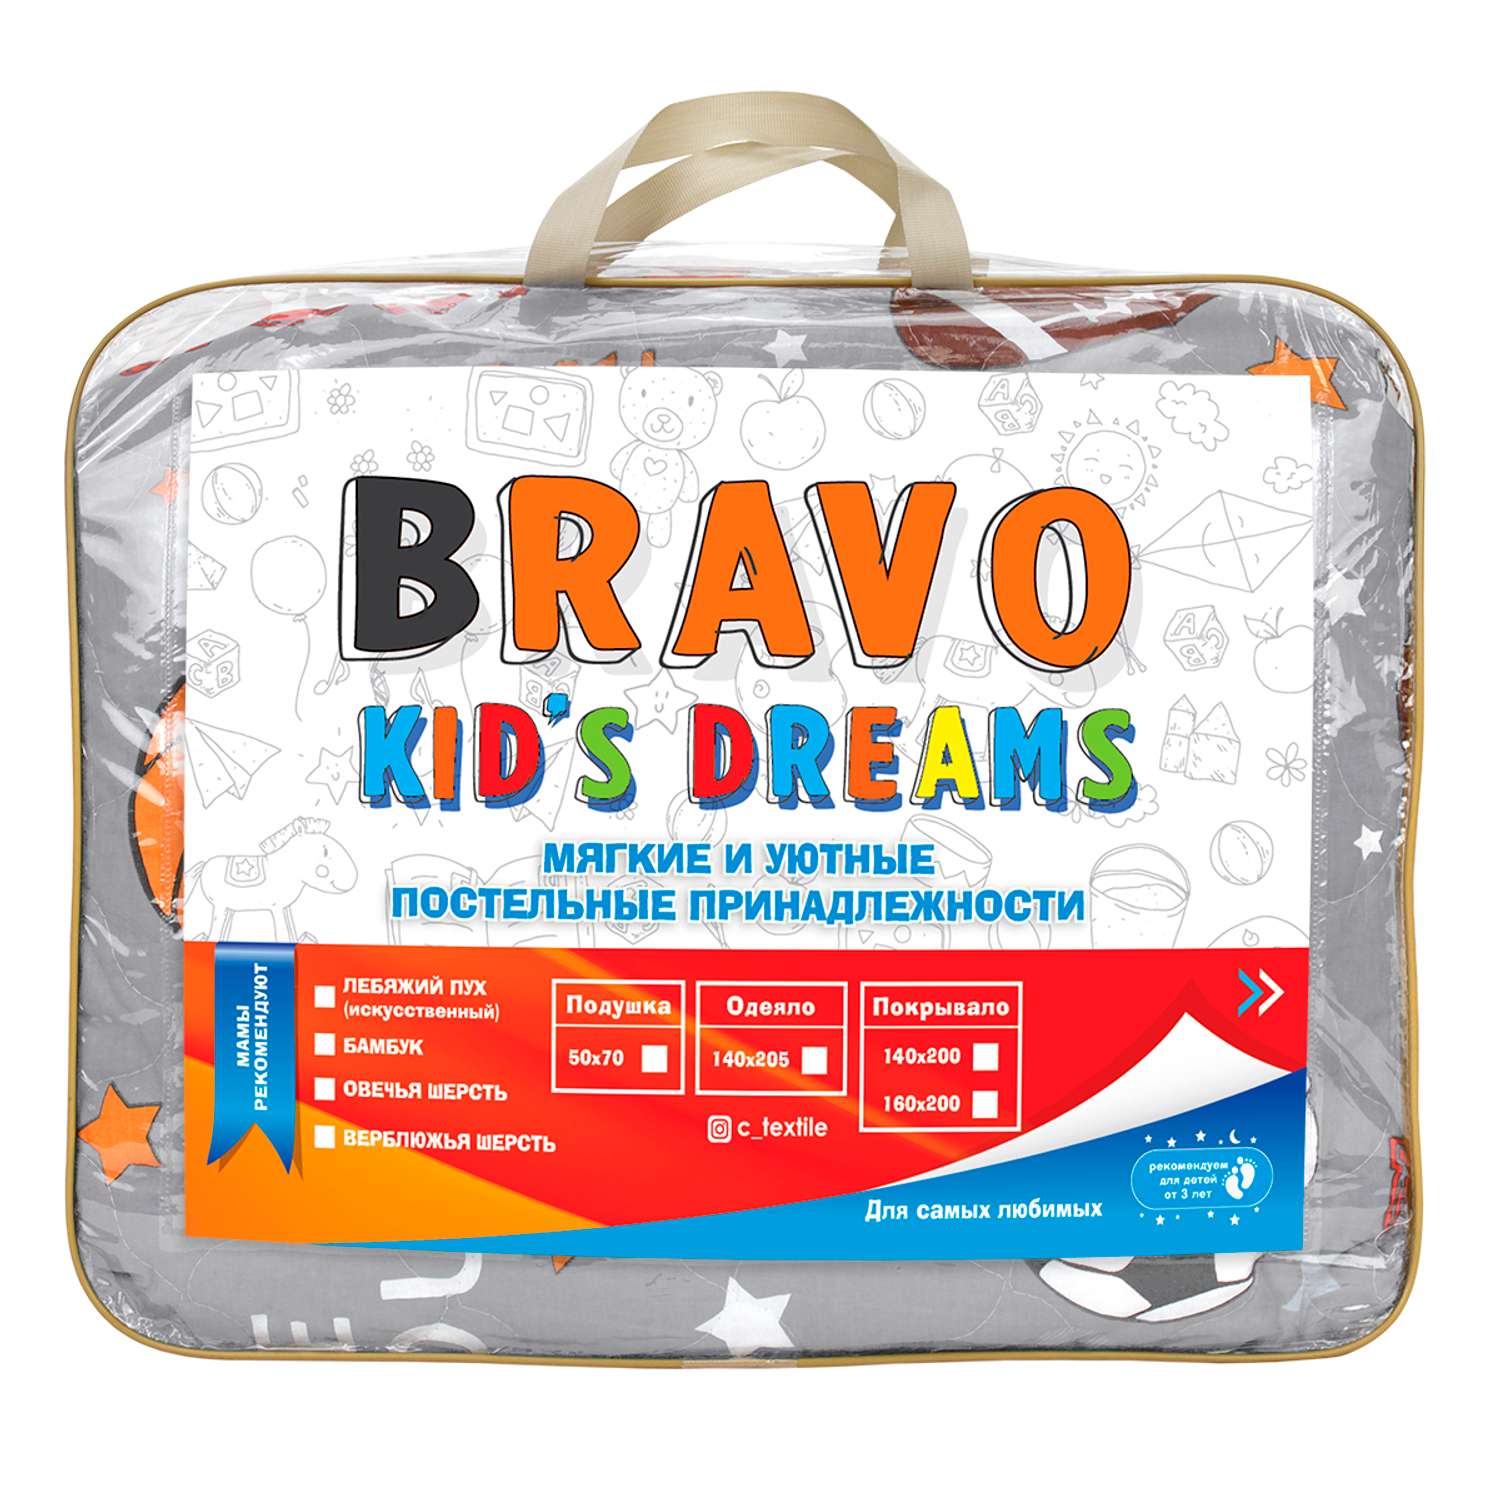 Покрывало BRAVO kids dreams Спорт 160*200 рис.4434-2+4434а-1 - фото 5